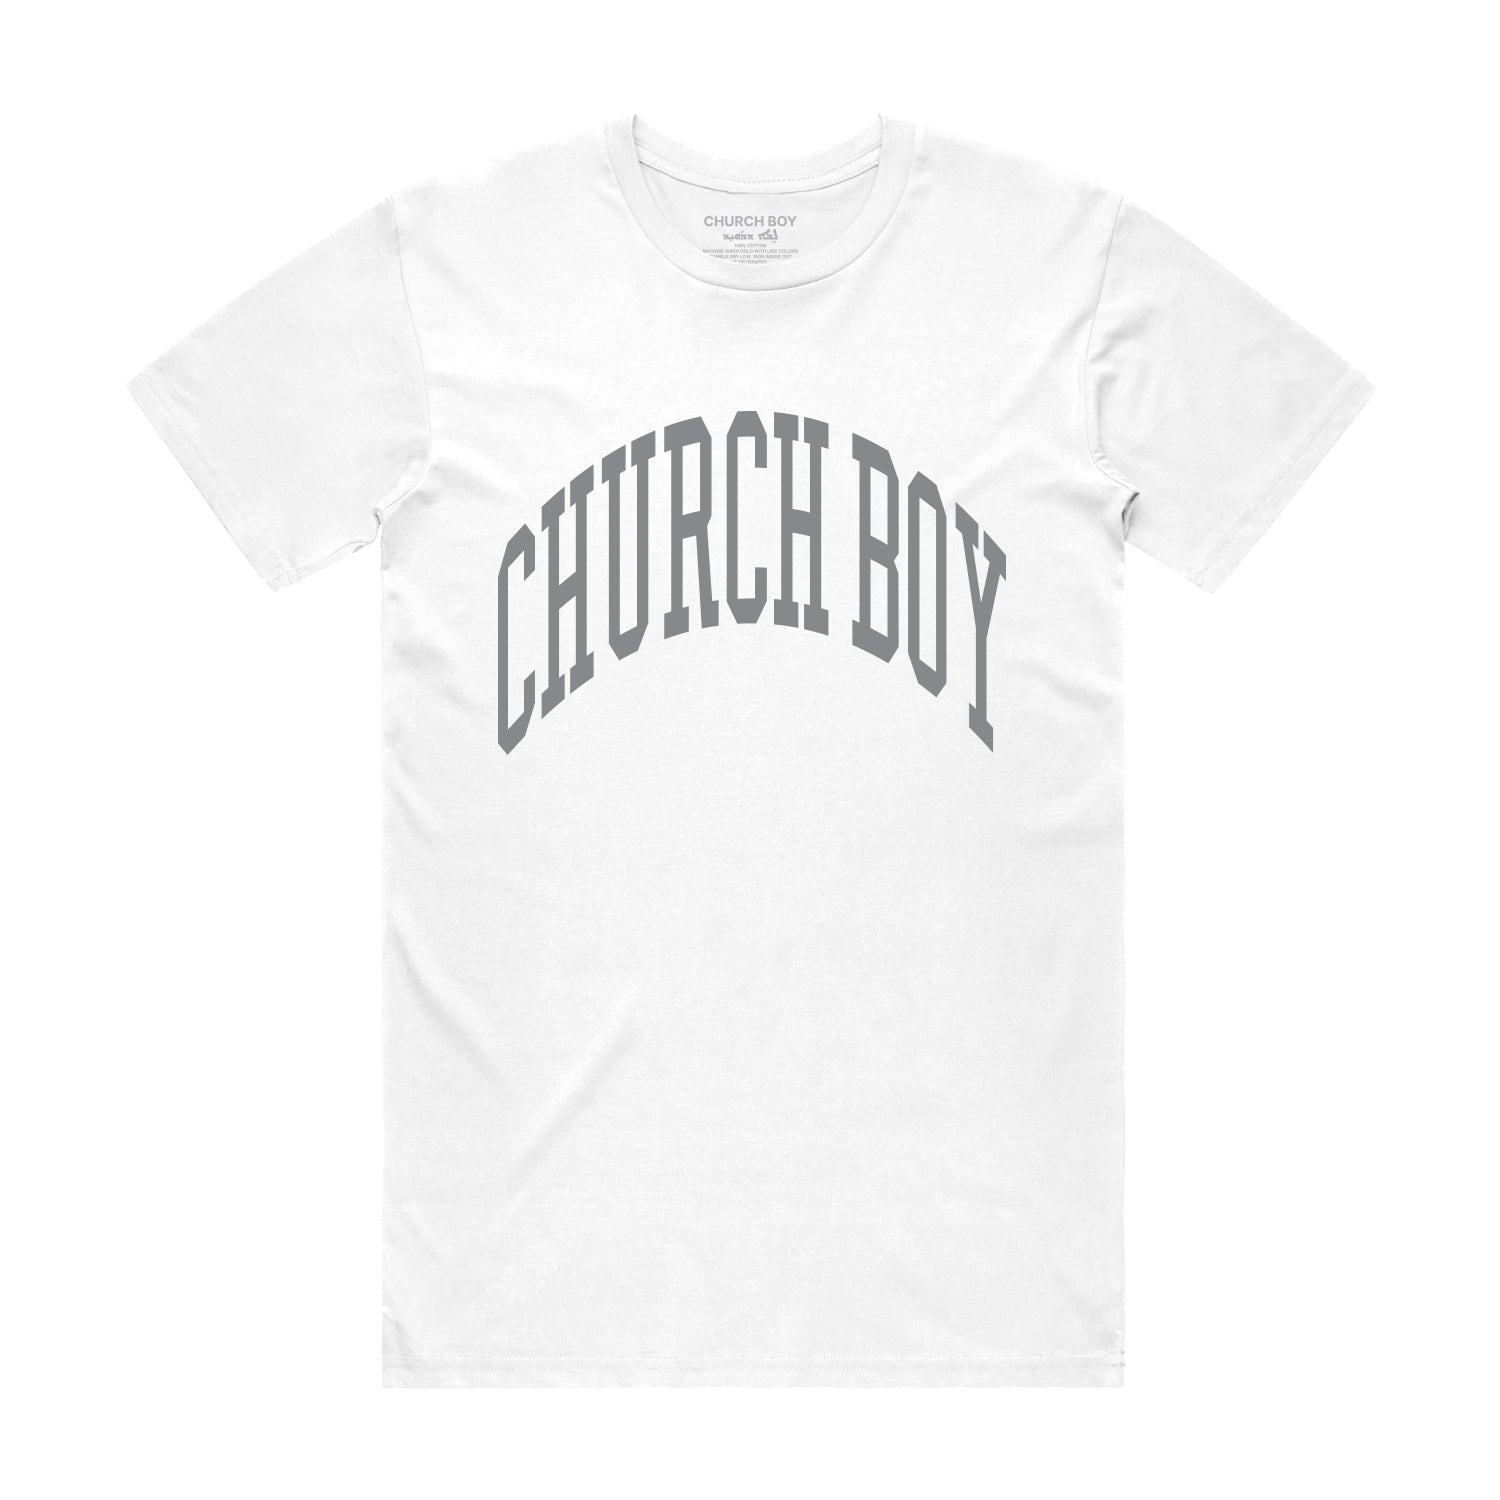 Tshirt - White Church Boy